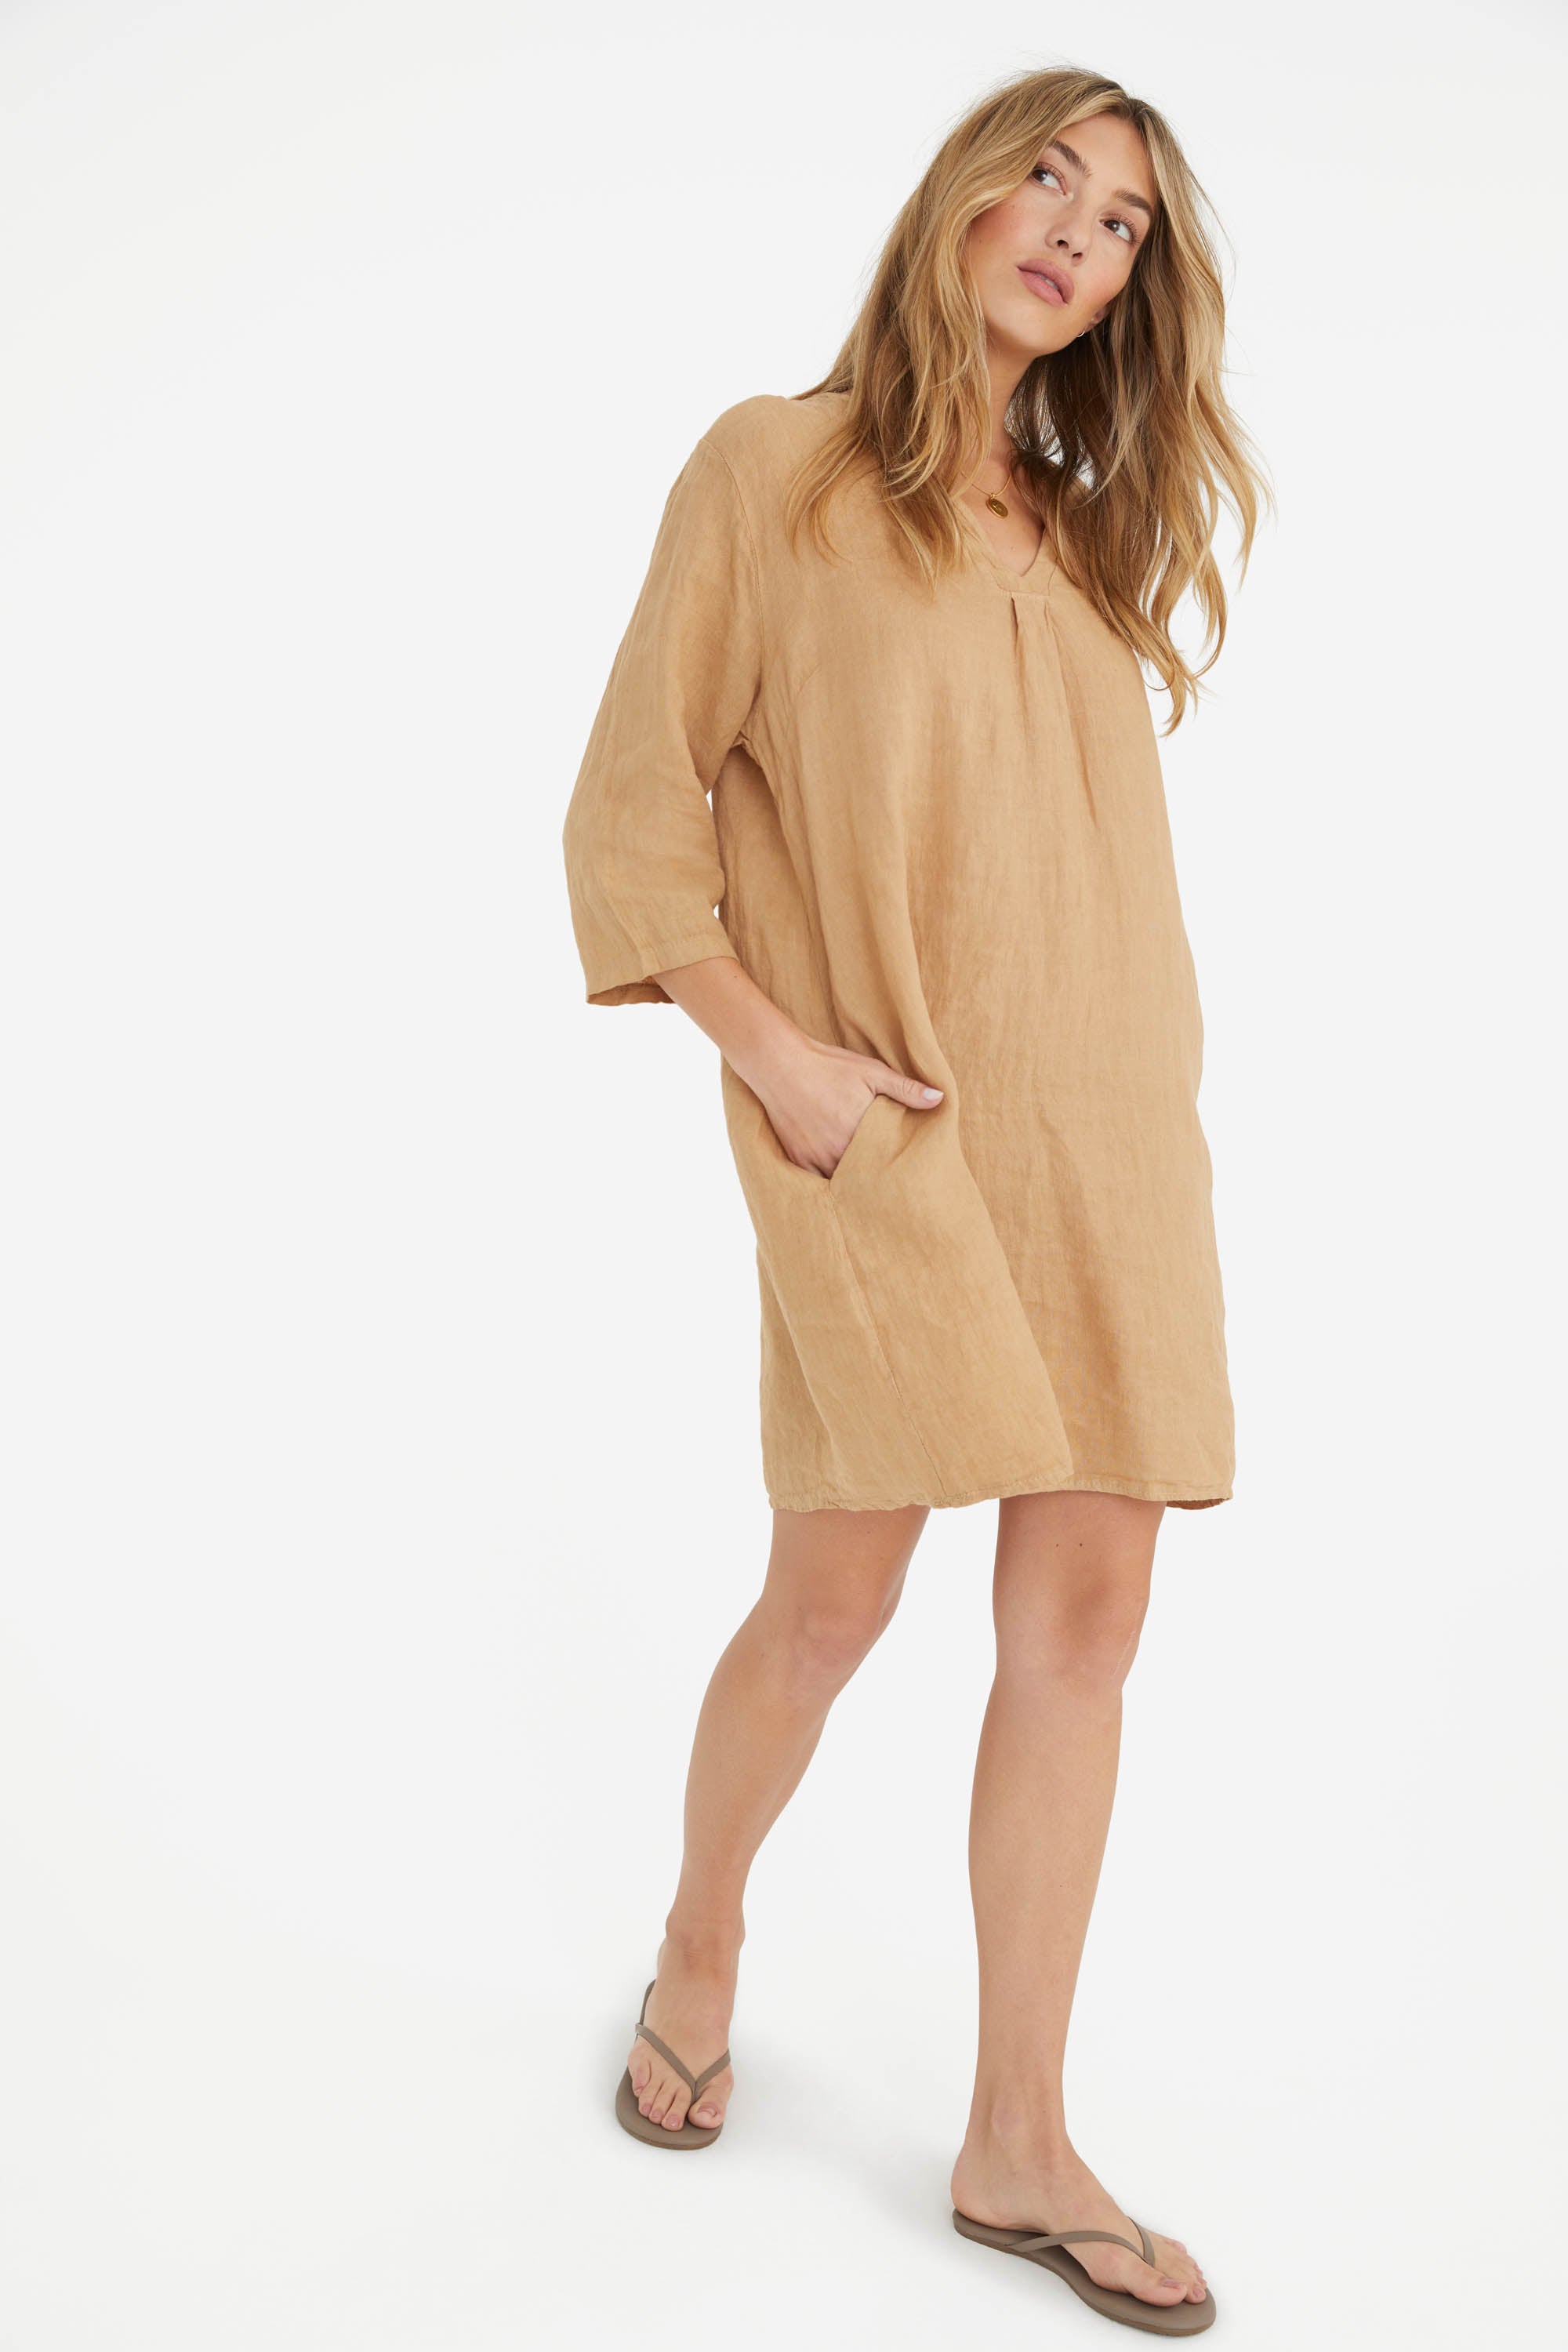 The Katy Linen Dress in Camello